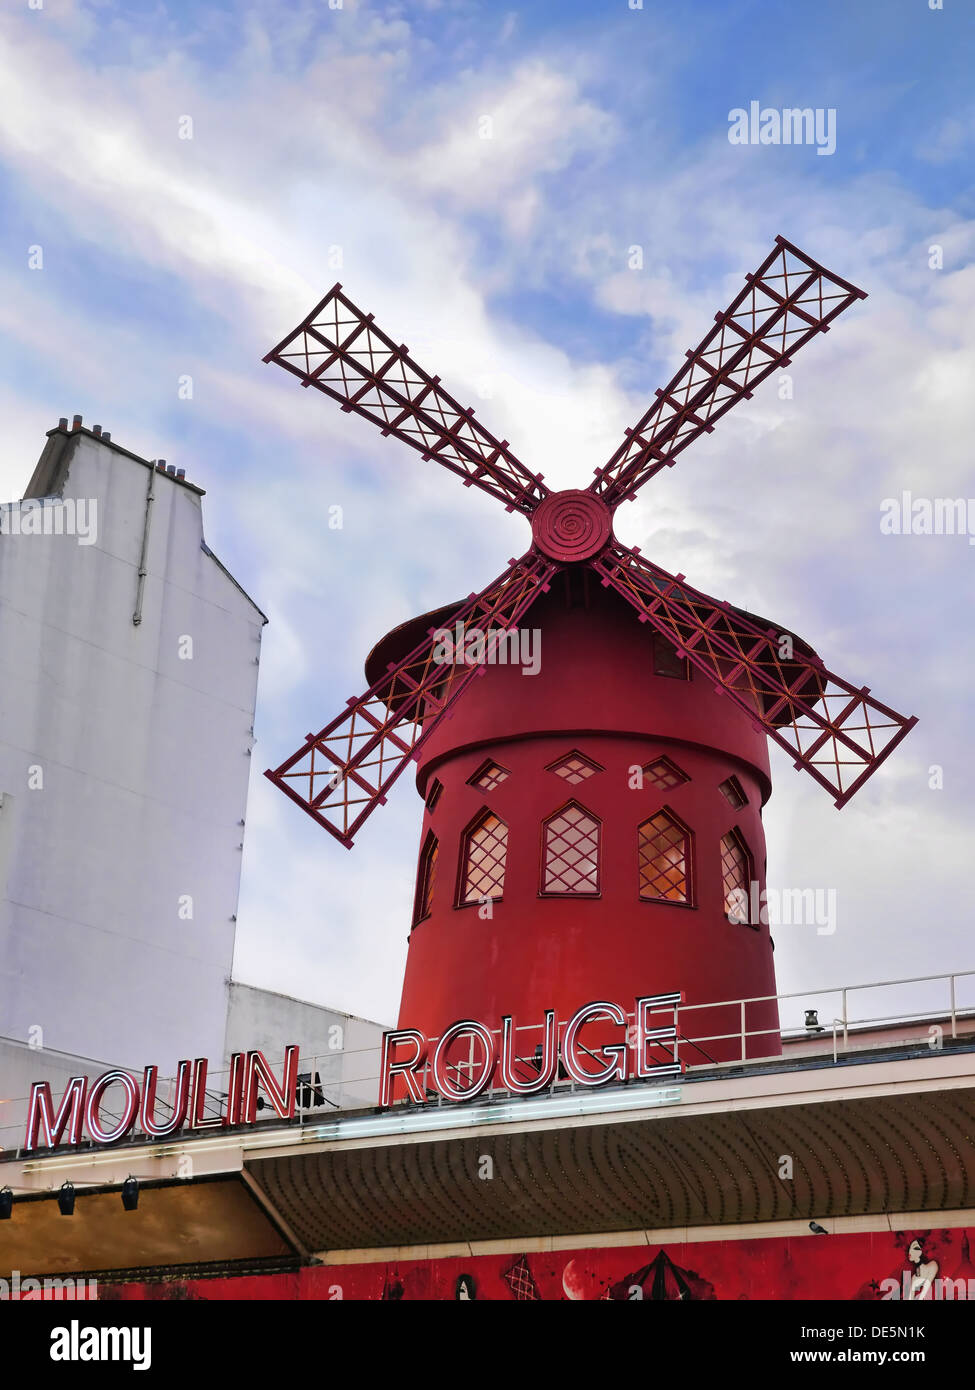 The famous Moulin Rouge cabaret building in Paris, France Stock Photo